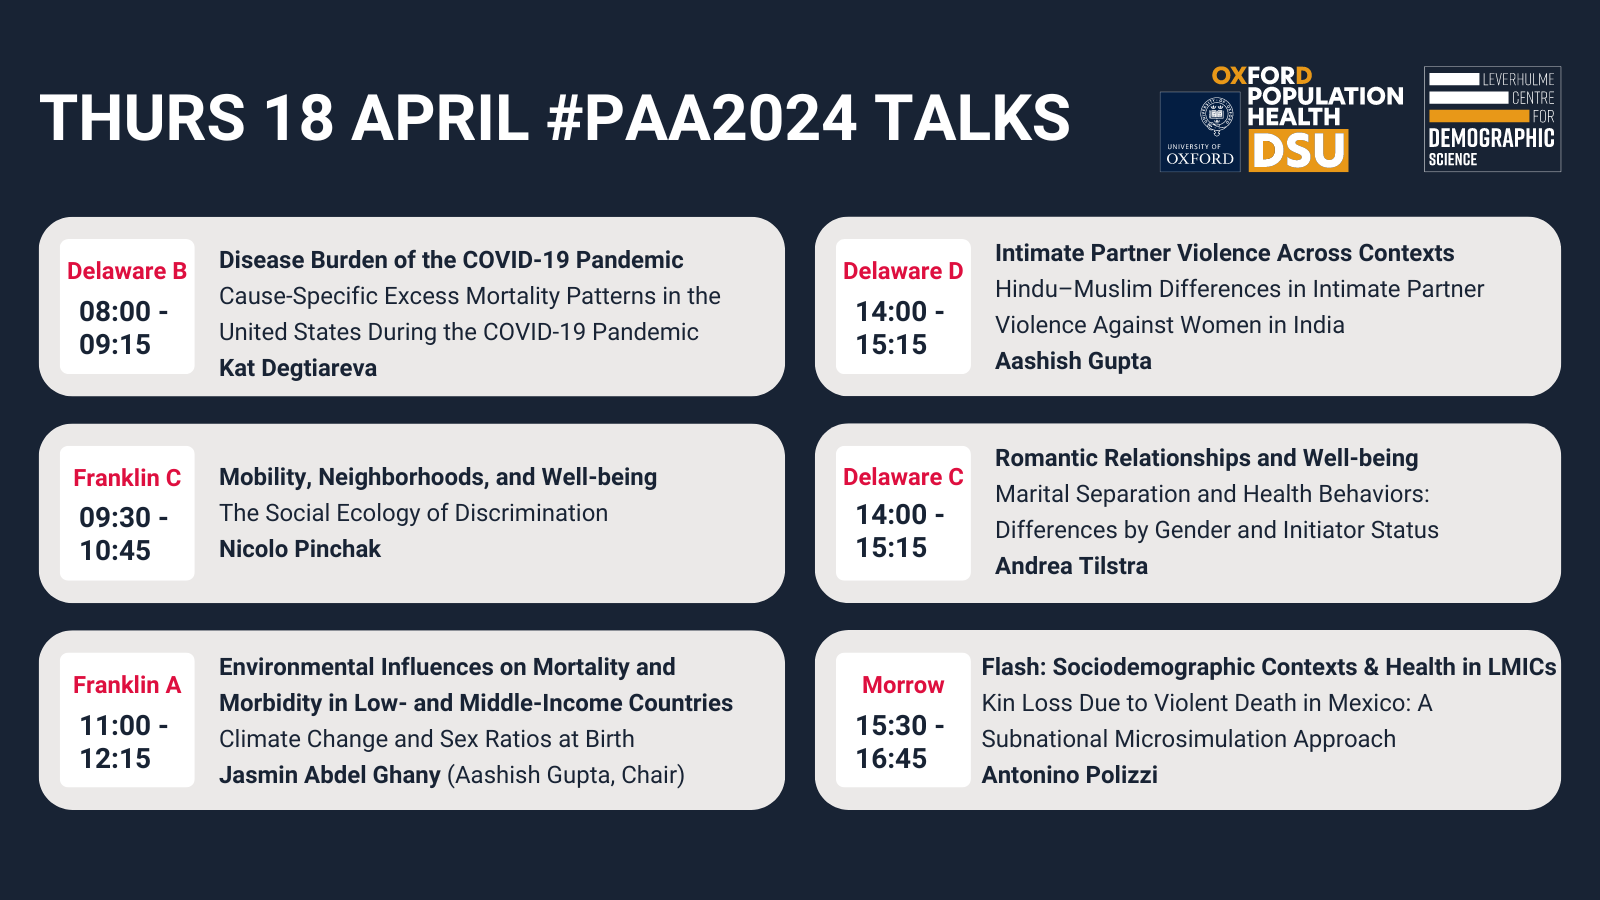 LCDS talks at PAA 2024 on Thursday 18 April